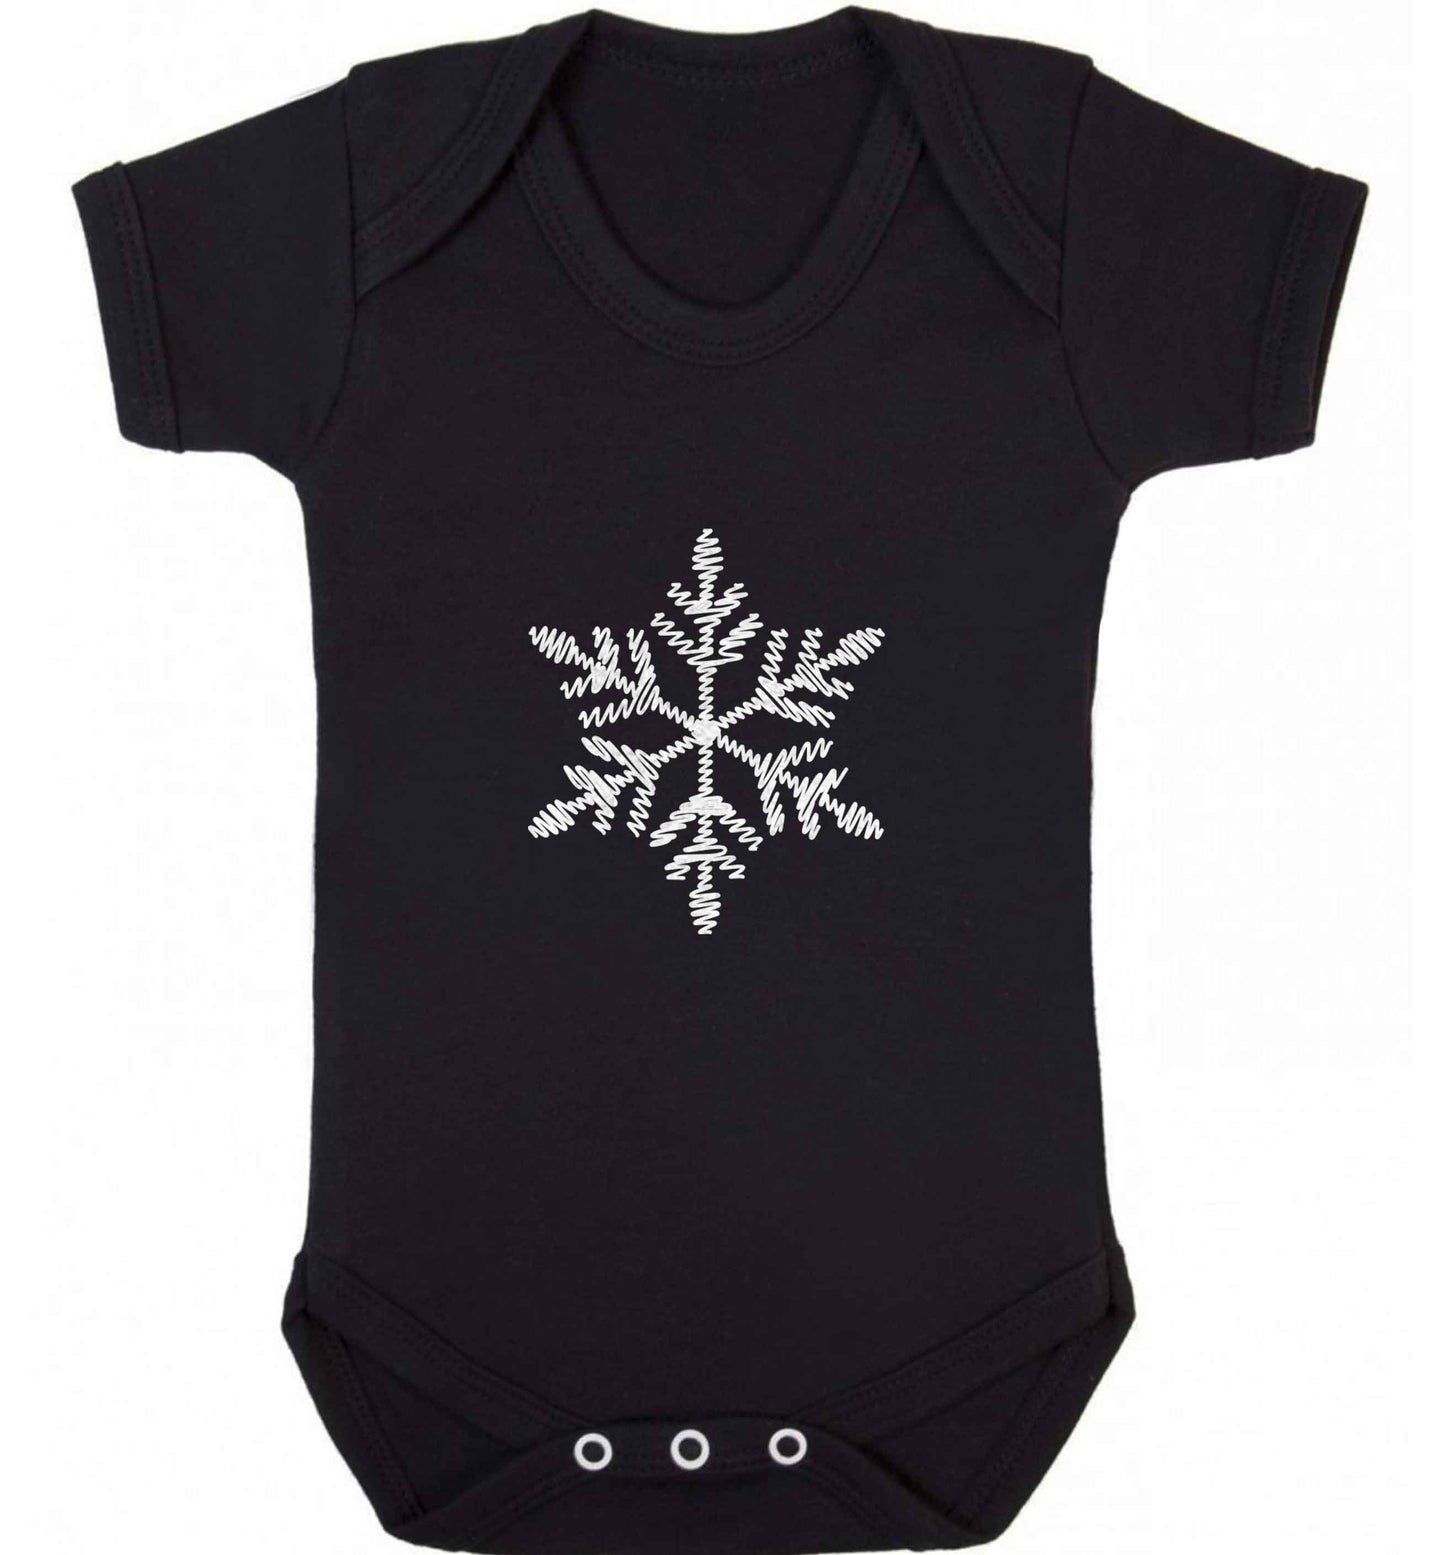 Snowflake baby vest black 18-24 months